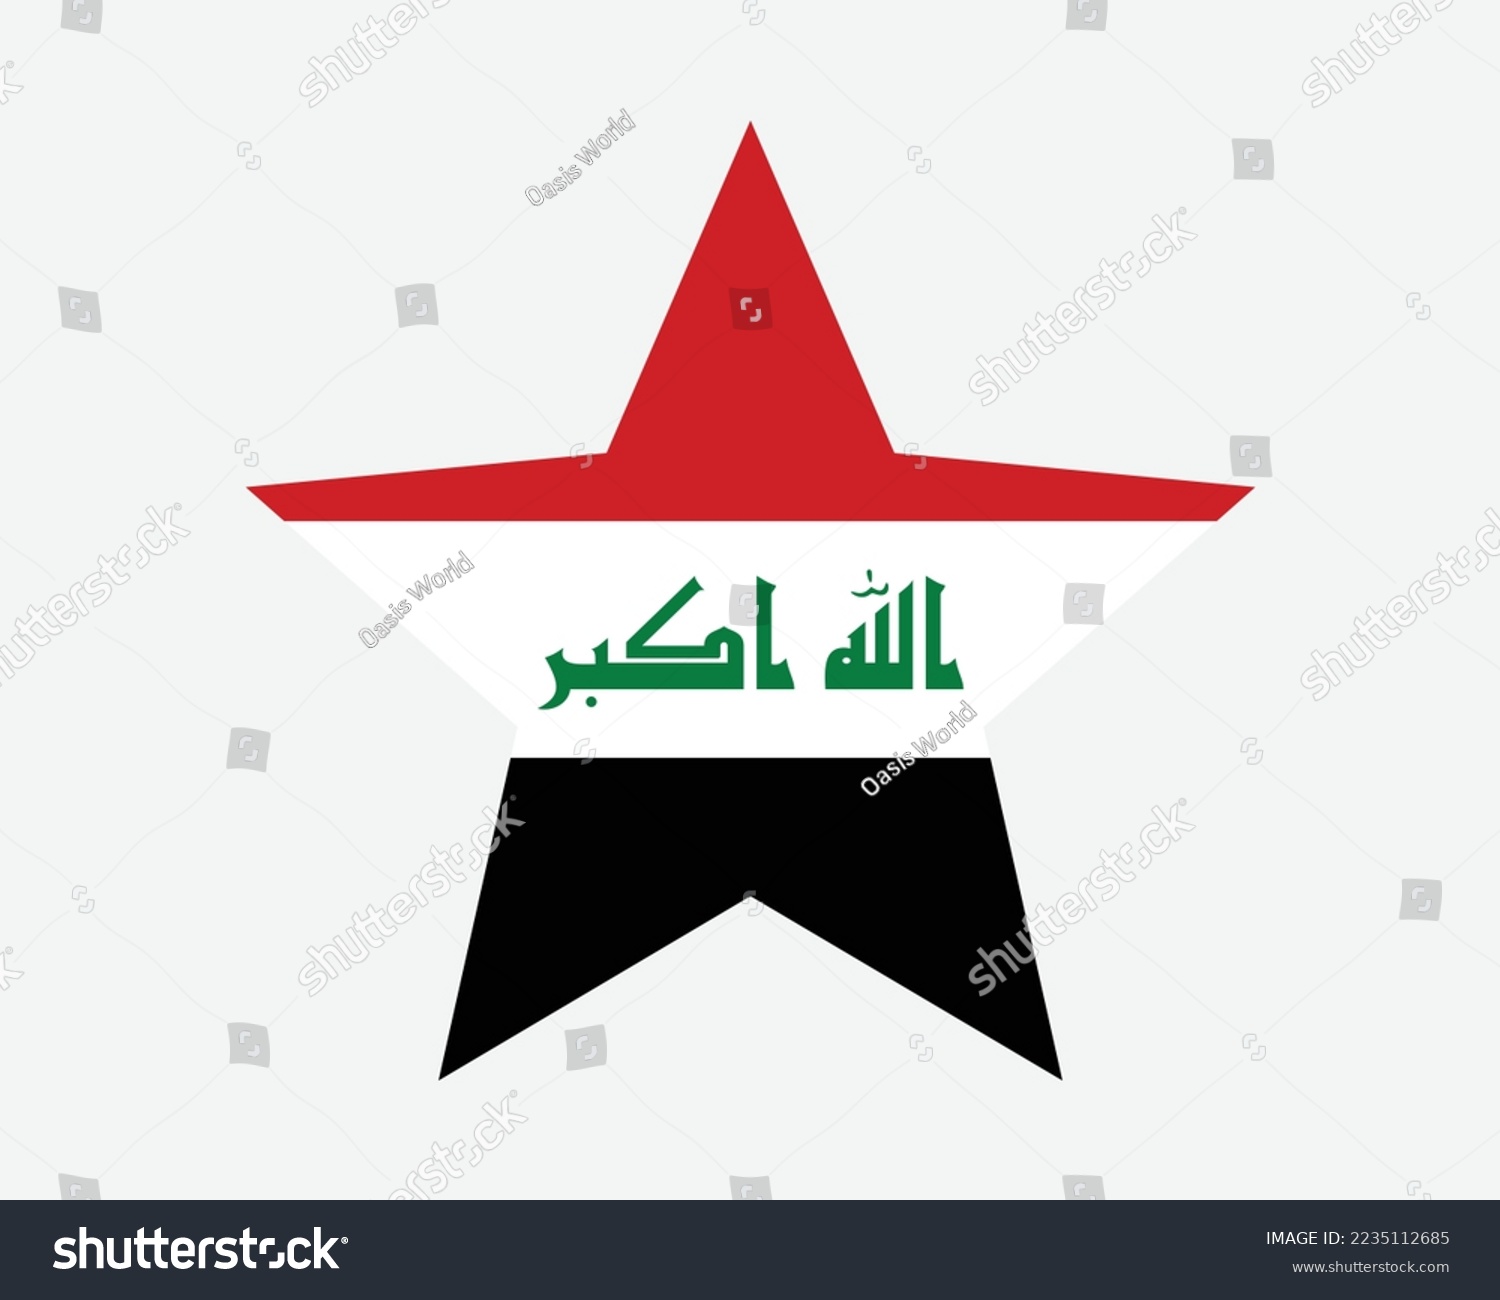 SVG of Iraq Star Flag. Iraqi Star Shape Flag. Republic of Iraq Country National Banner Icon Symbol Vector Flat Artwork Graphic Illustration svg